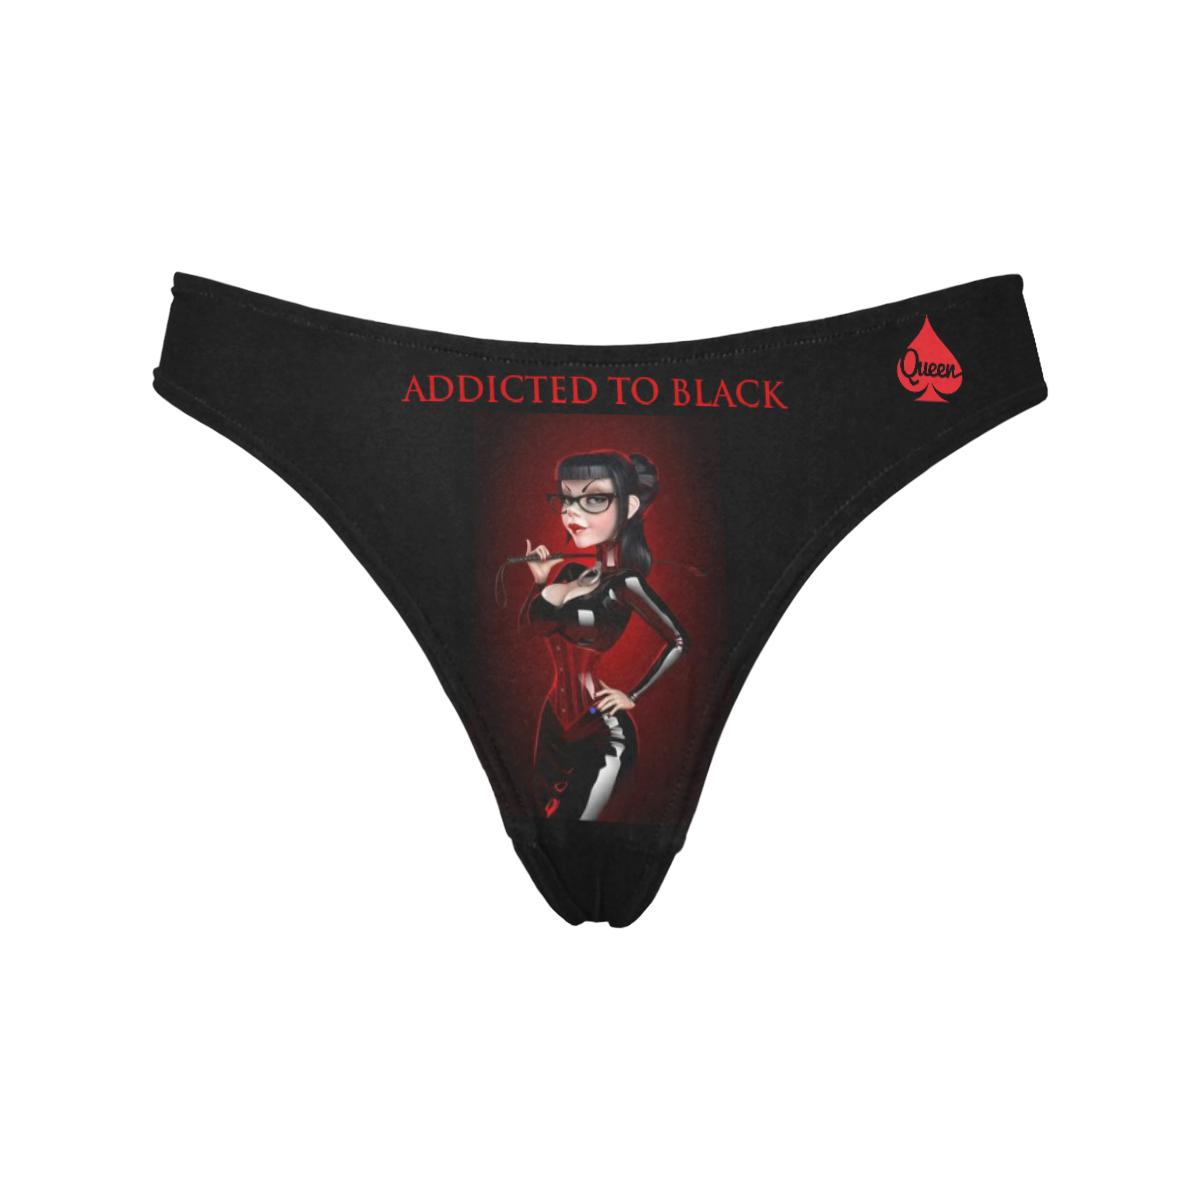 BLACKED Thong – Queenos Apparel